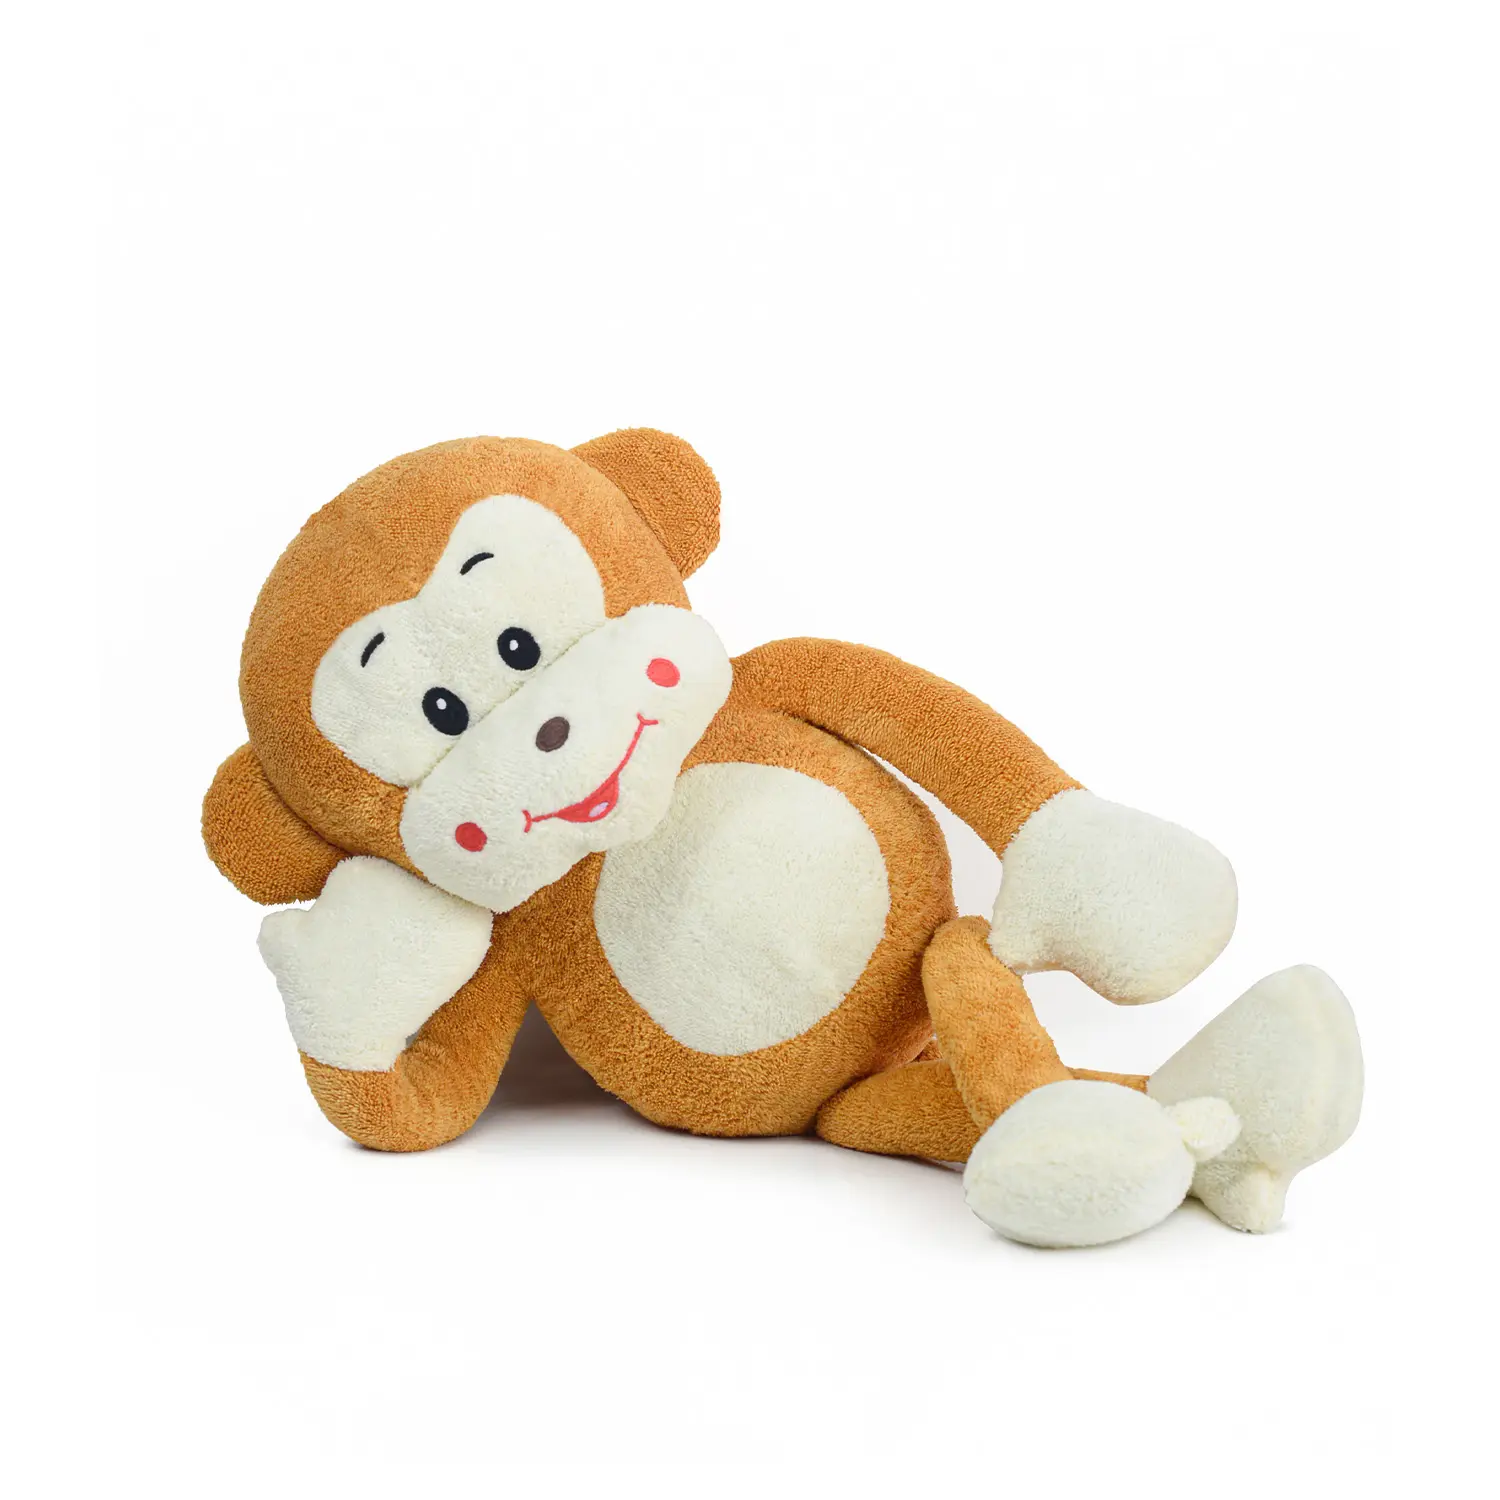 Wholesale Quality and Extra Soft 65 Cm Cute Kakili Monkey and Monkey Plush Toy from Kids Toys